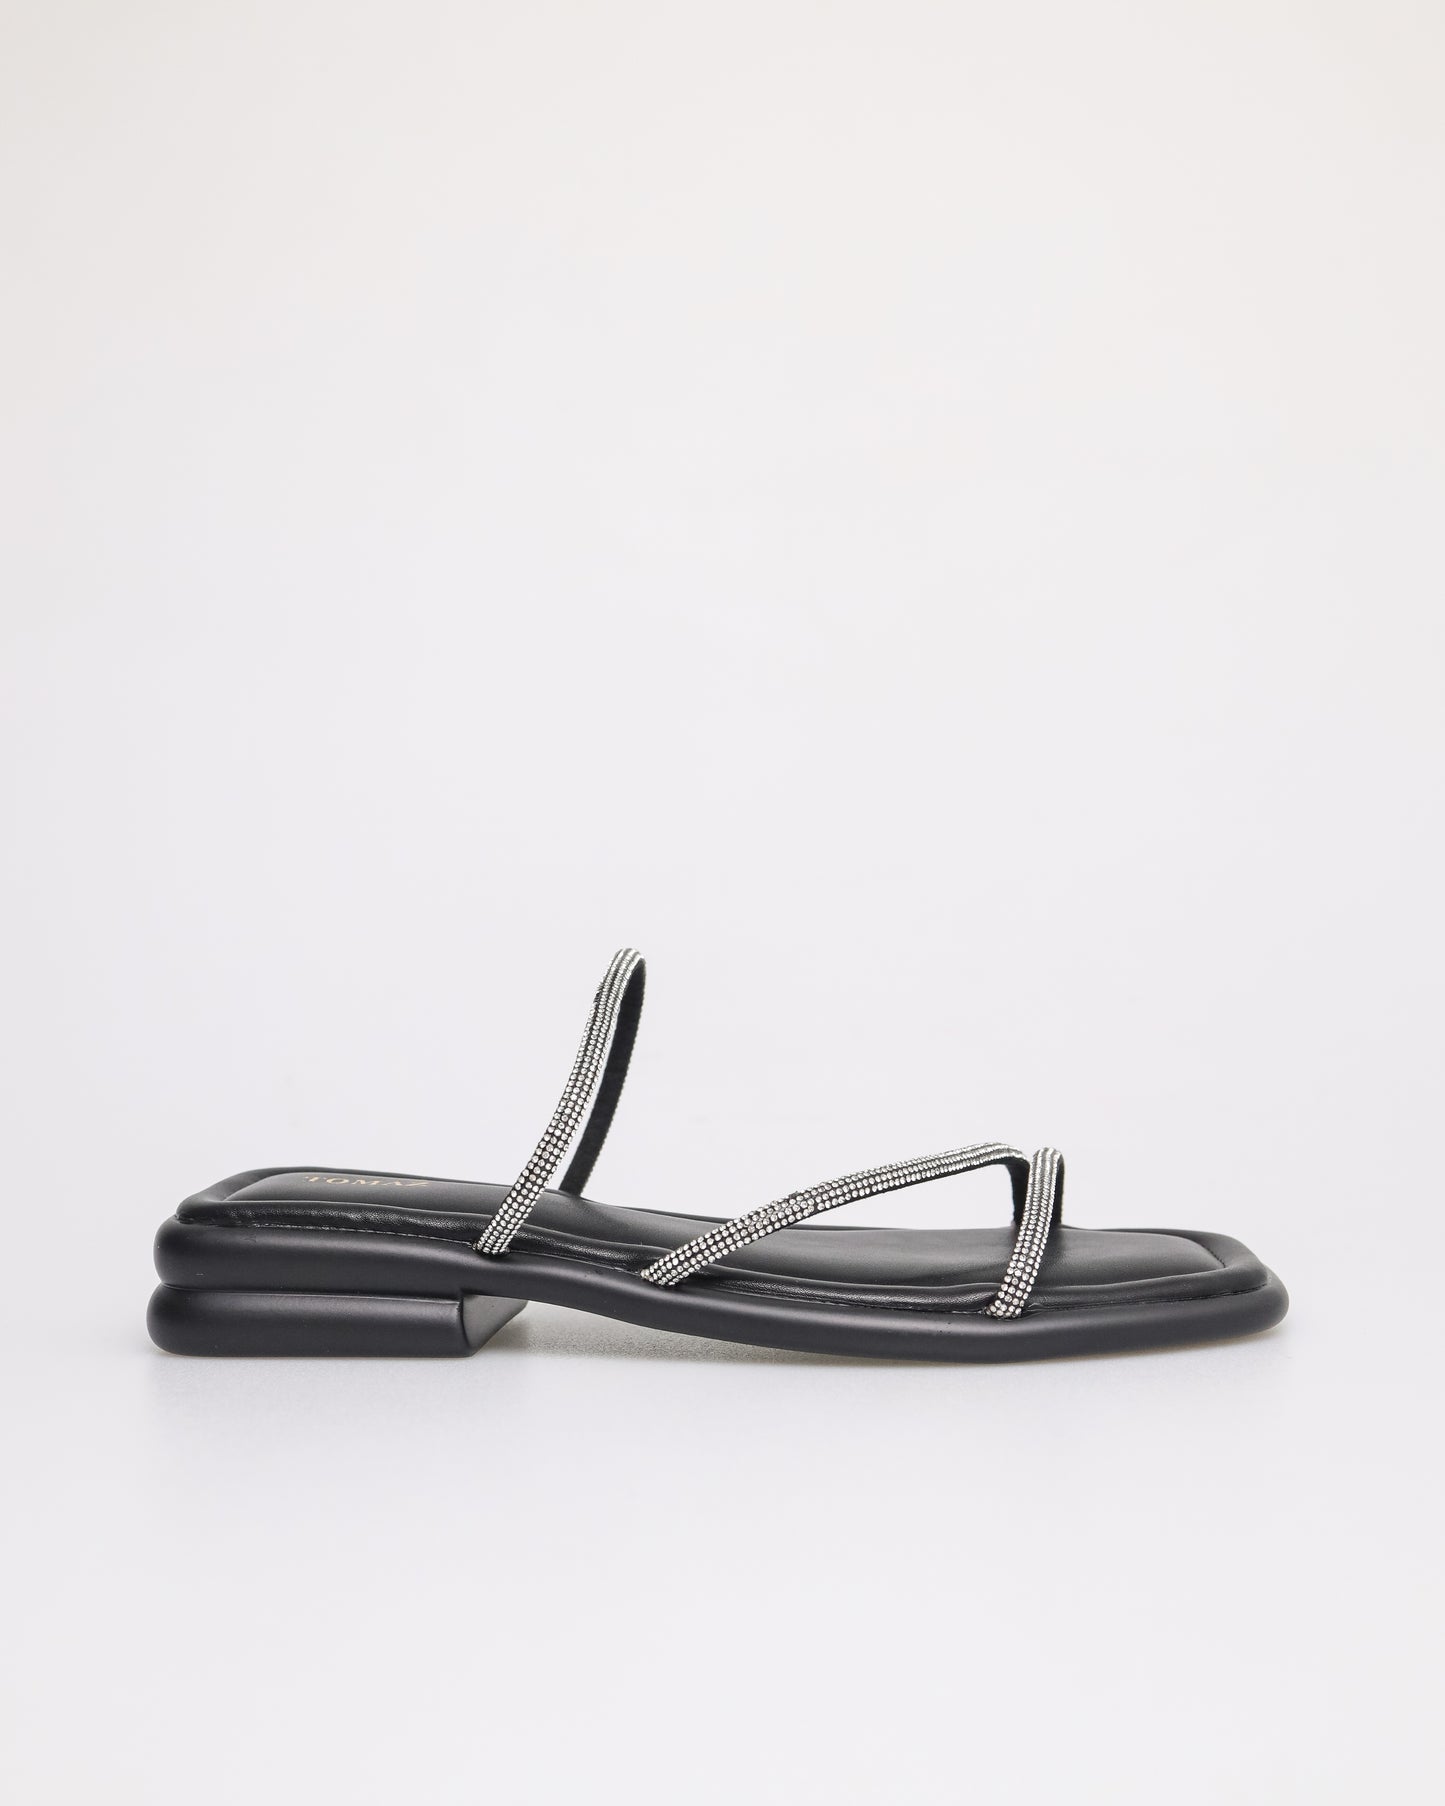 Tomaz NN185 Ladies Crystal Strap Sandal (Black)